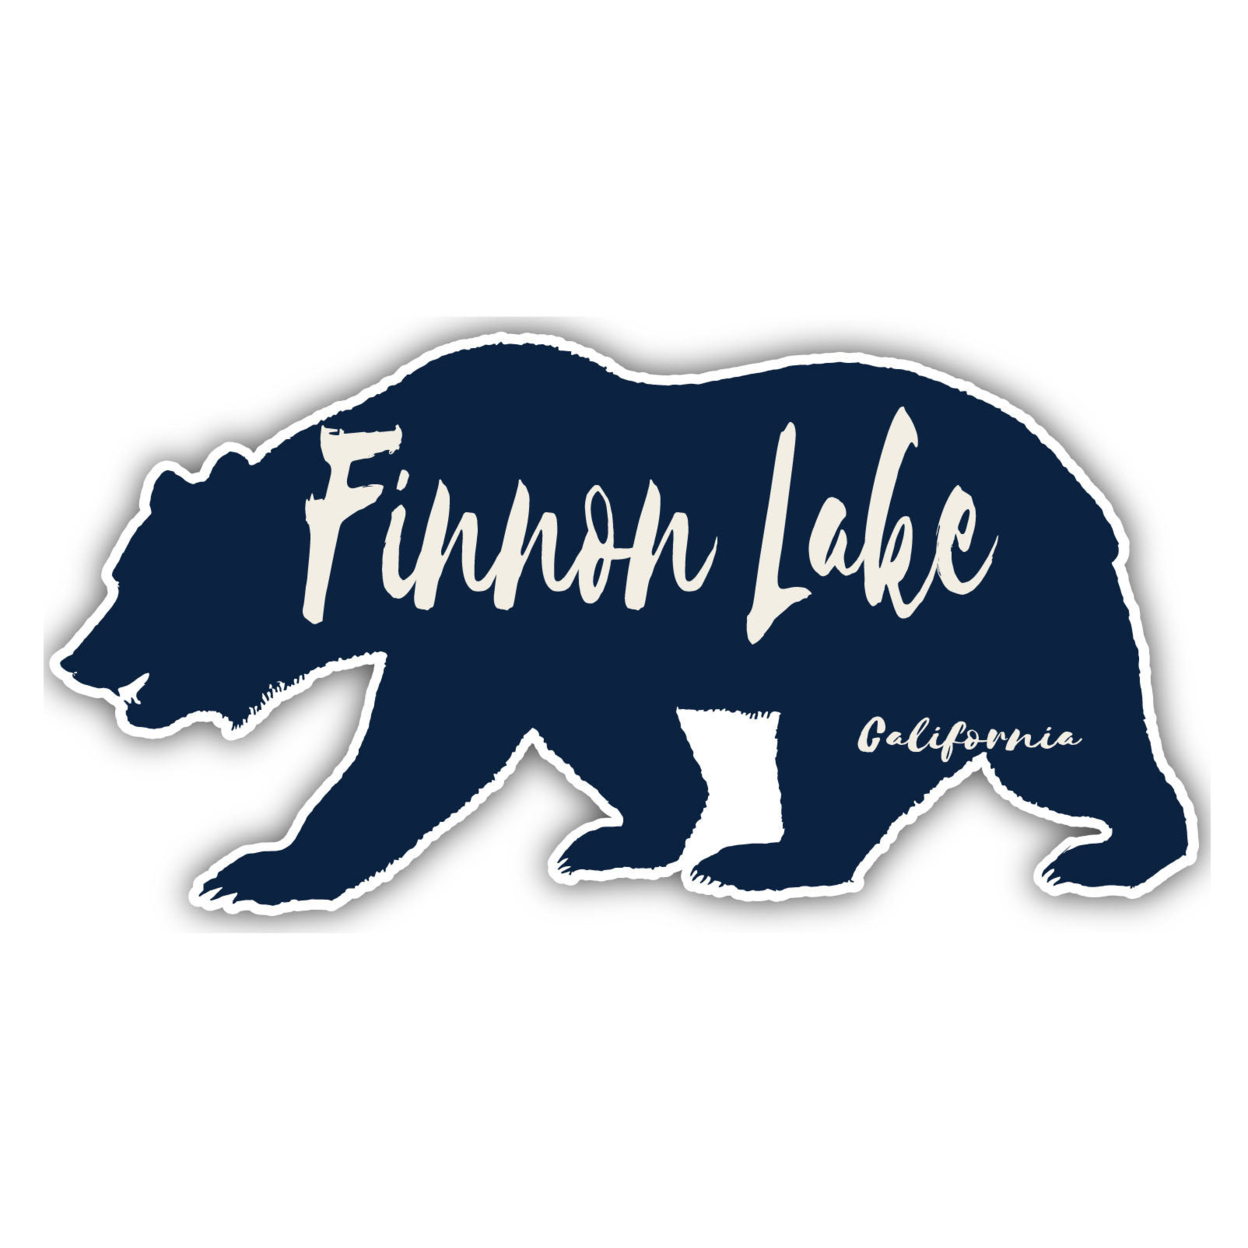 Finnon Lake California Souvenir Decorative Stickers (Choose Theme And Size) - Single Unit, 6-Inch, Camp Life